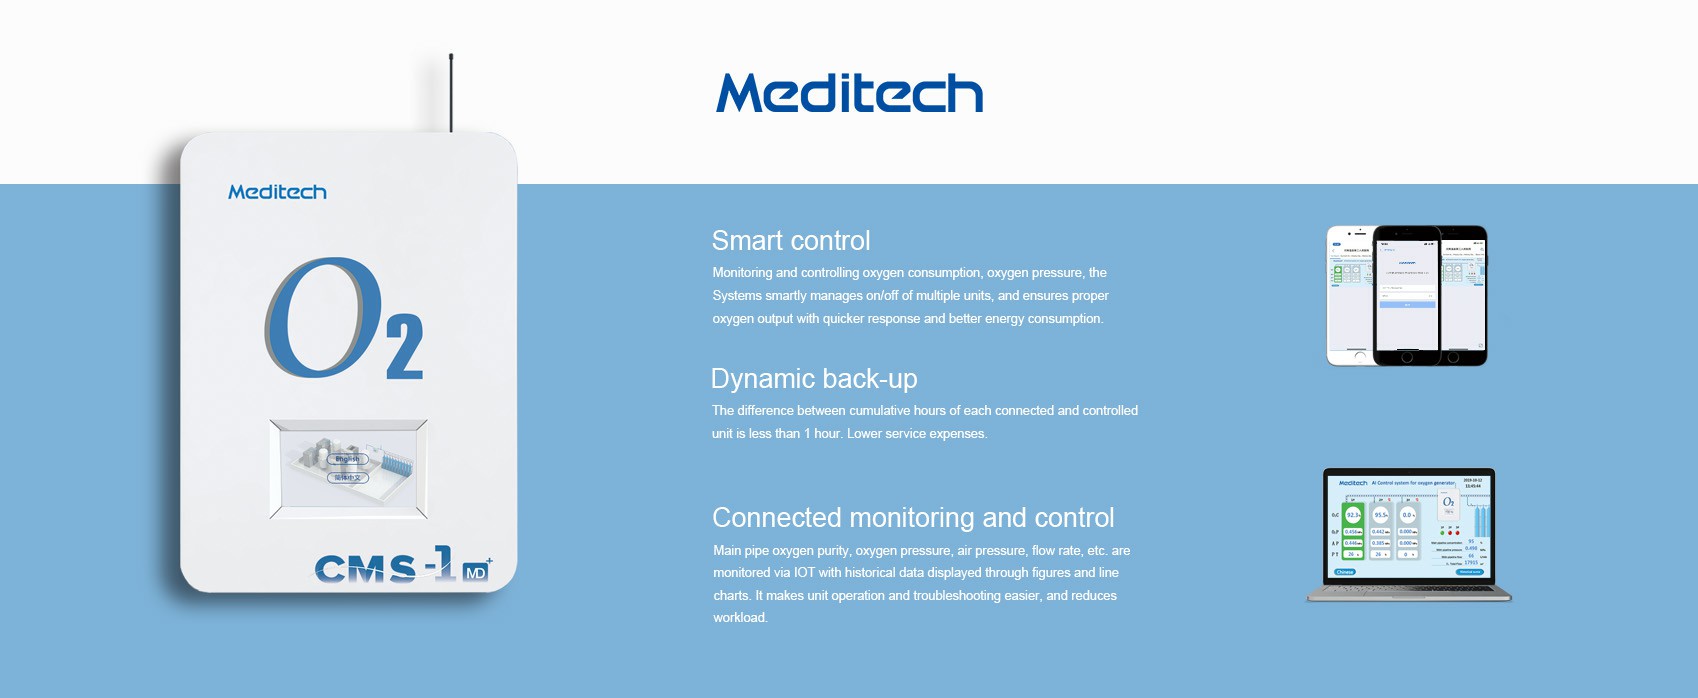 Meditech smart control system